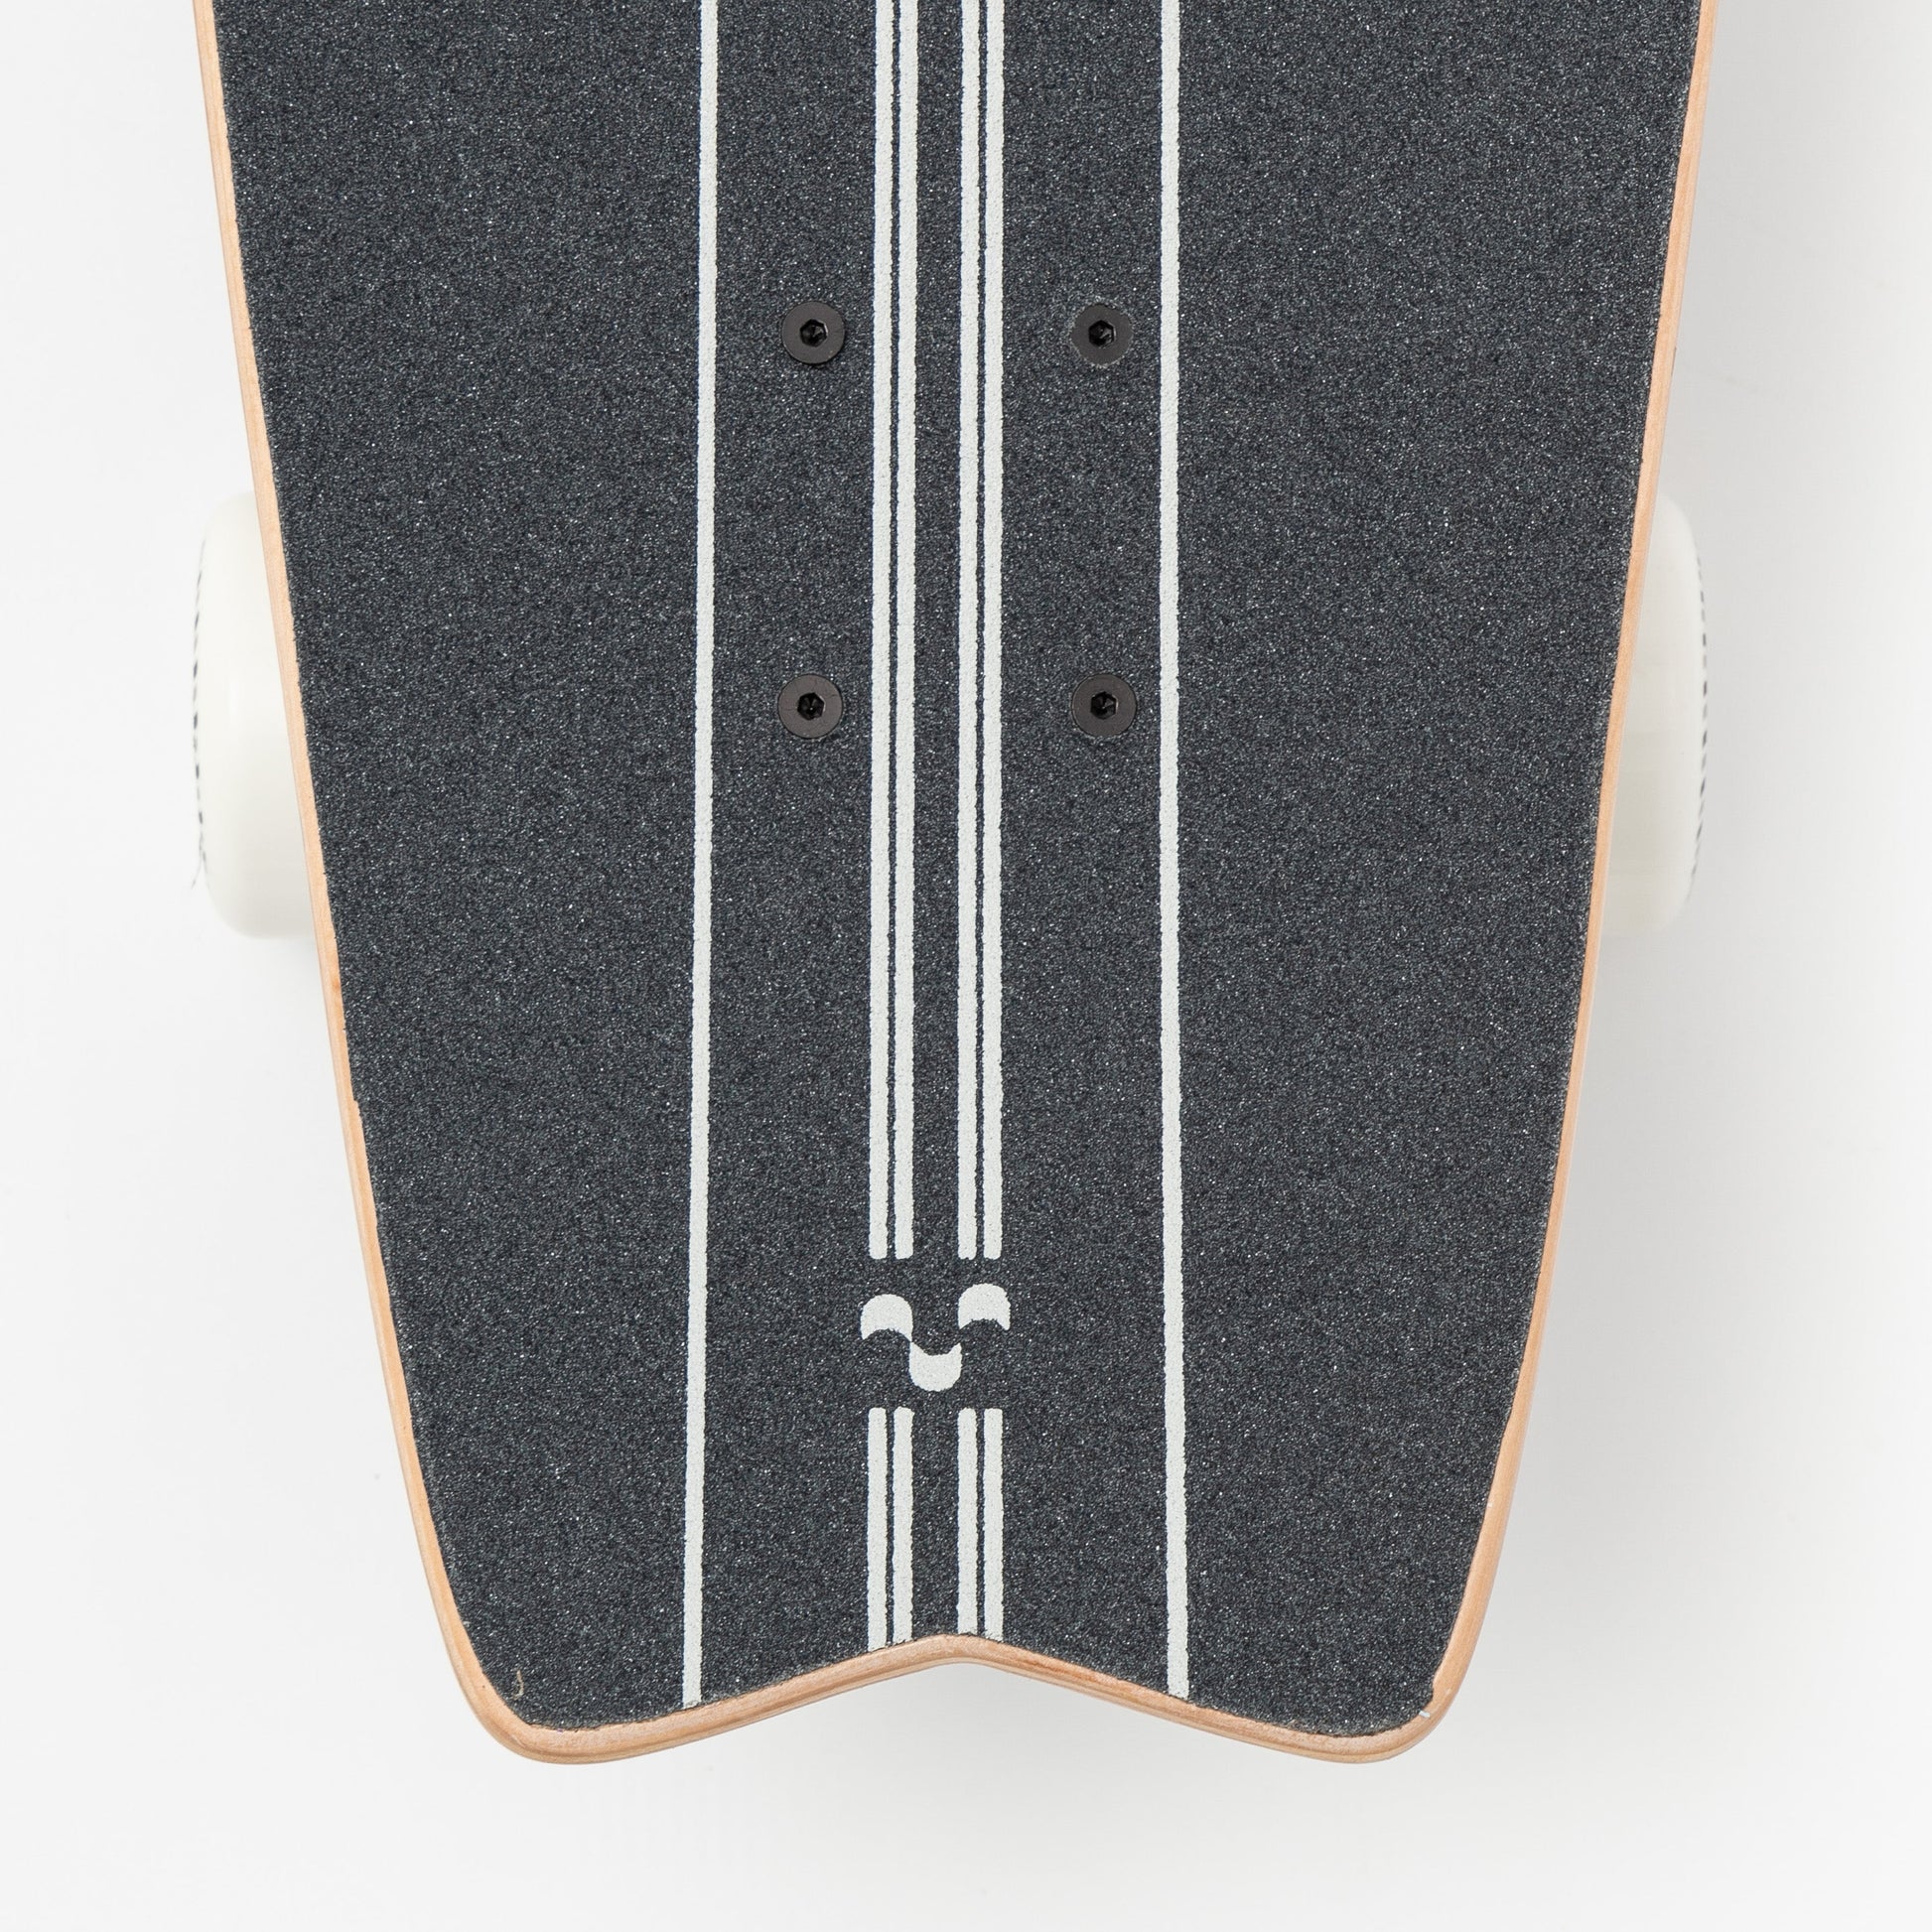 Ultimate Boards 'Tyler' Surfskate - SkatebruhSG